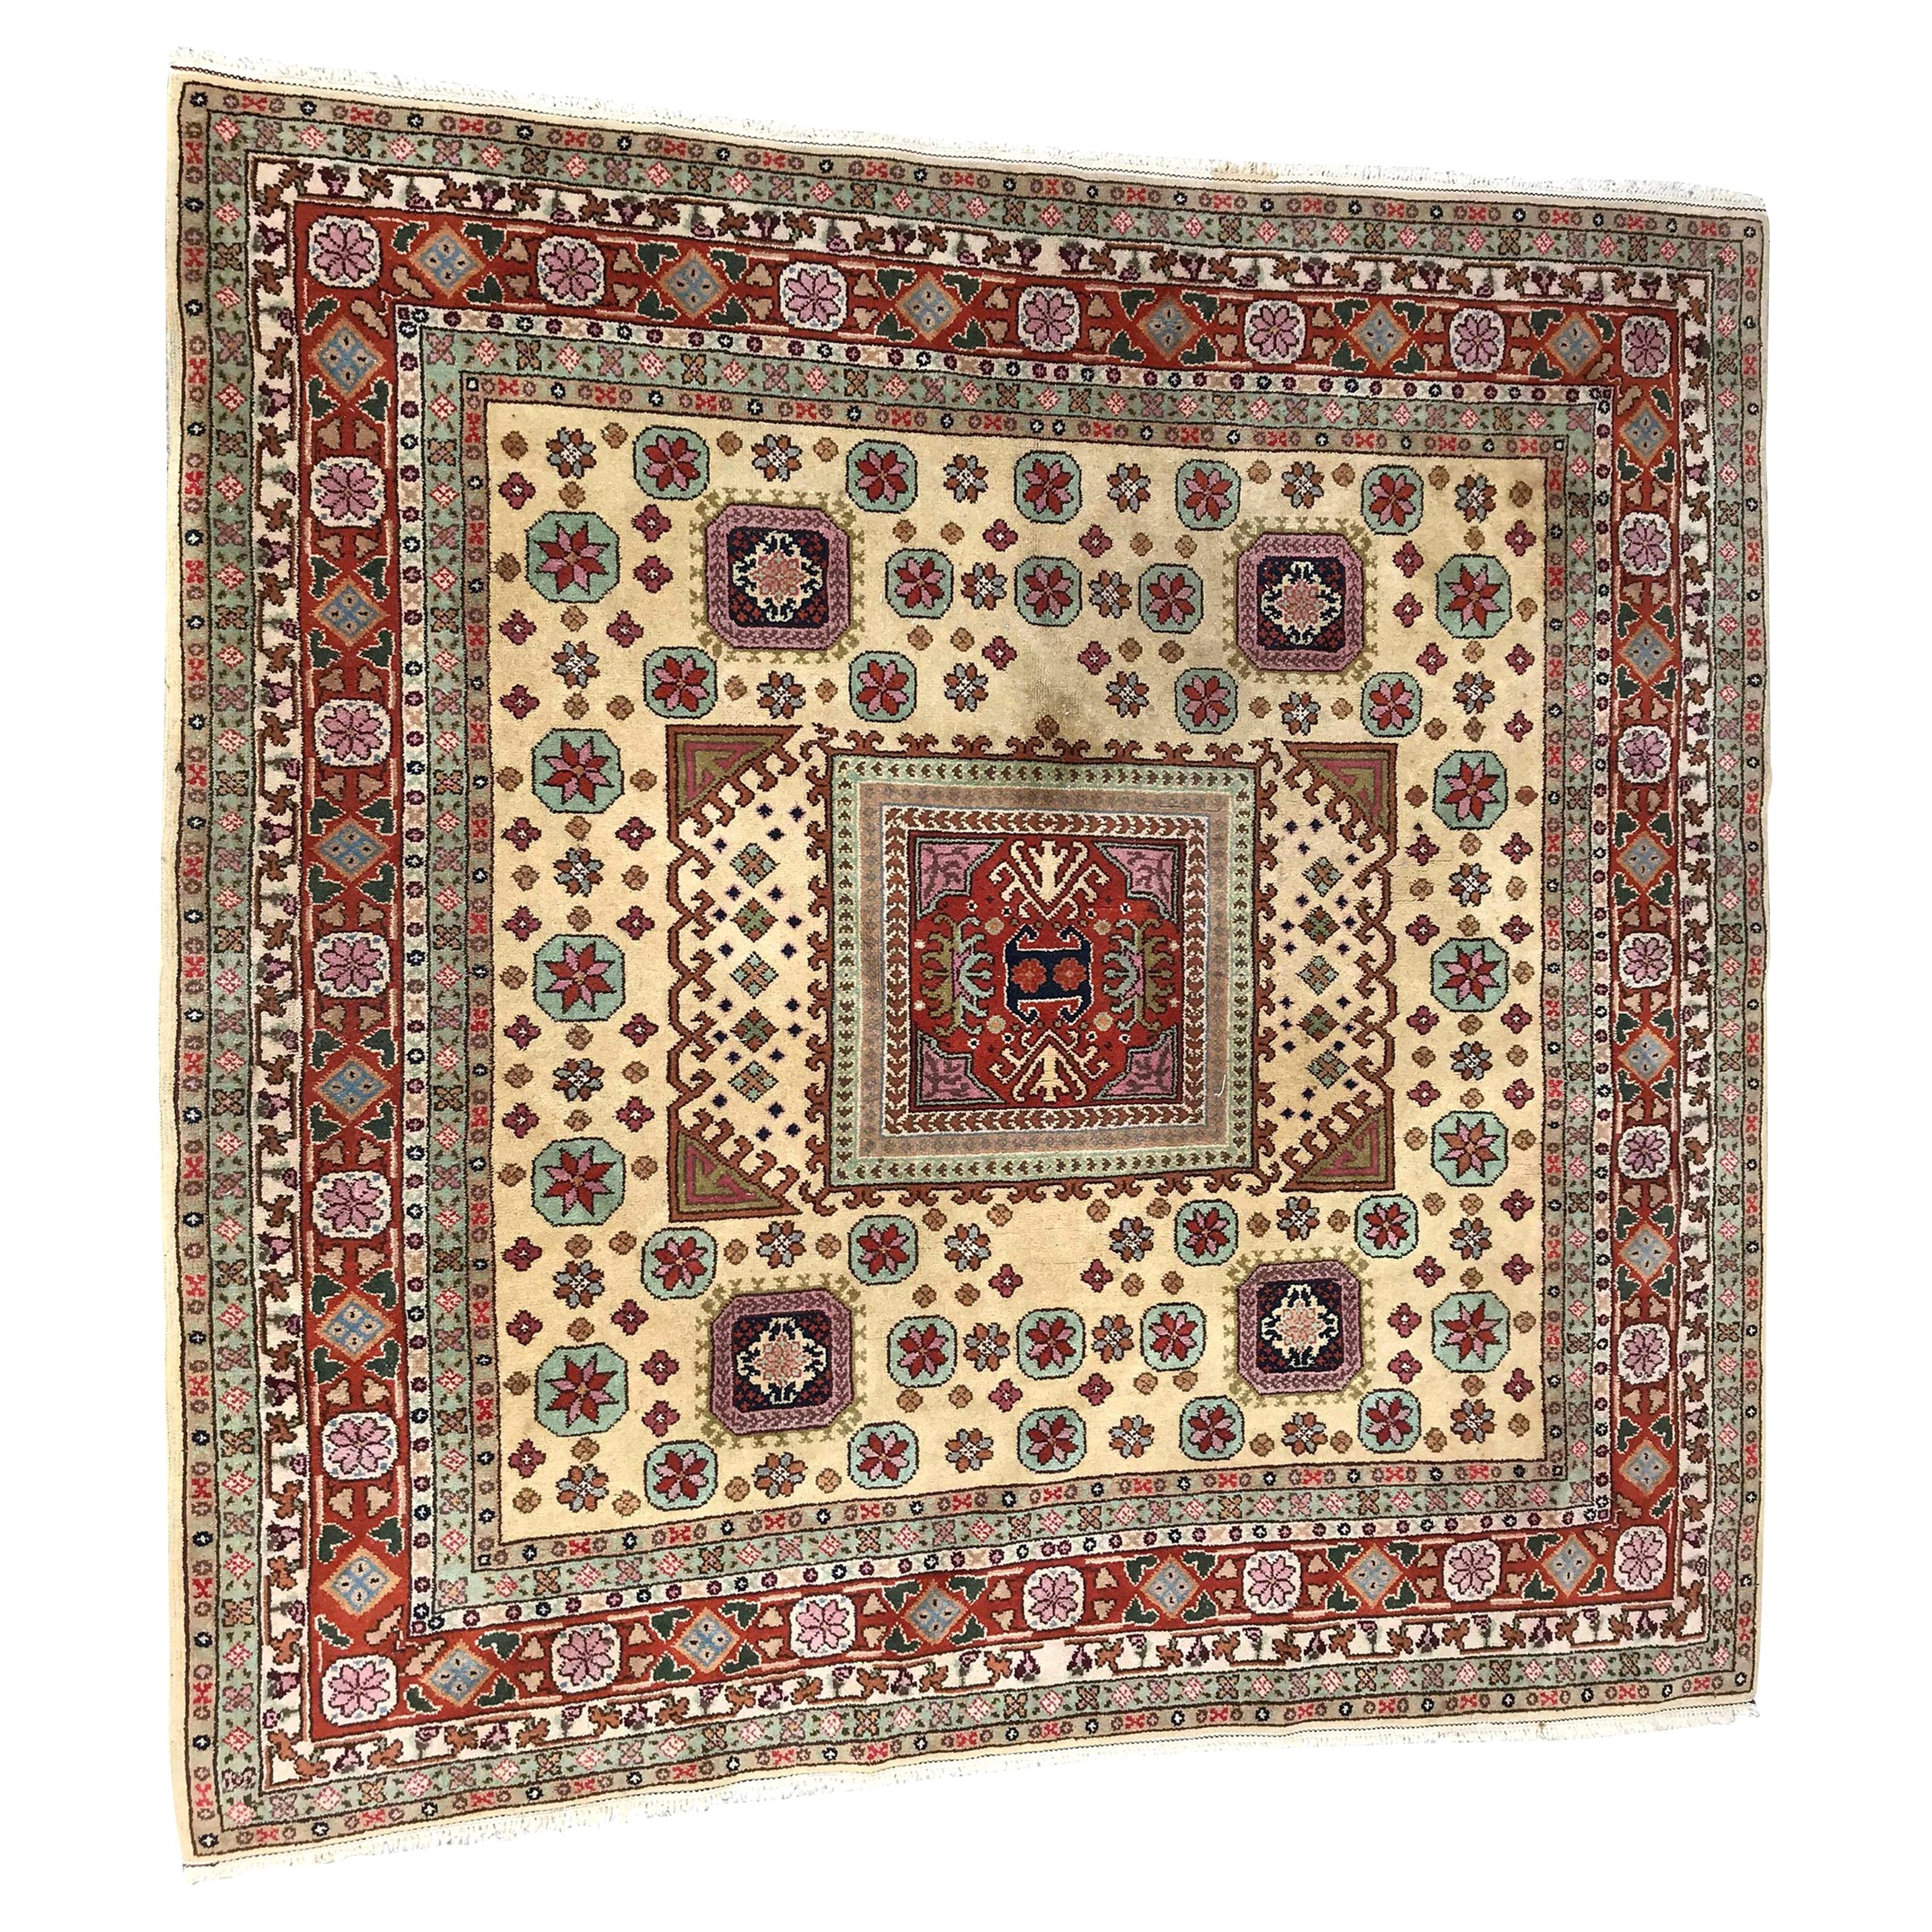 Bobyrug’s Transylvanian Square Persian Design Rug For Sale